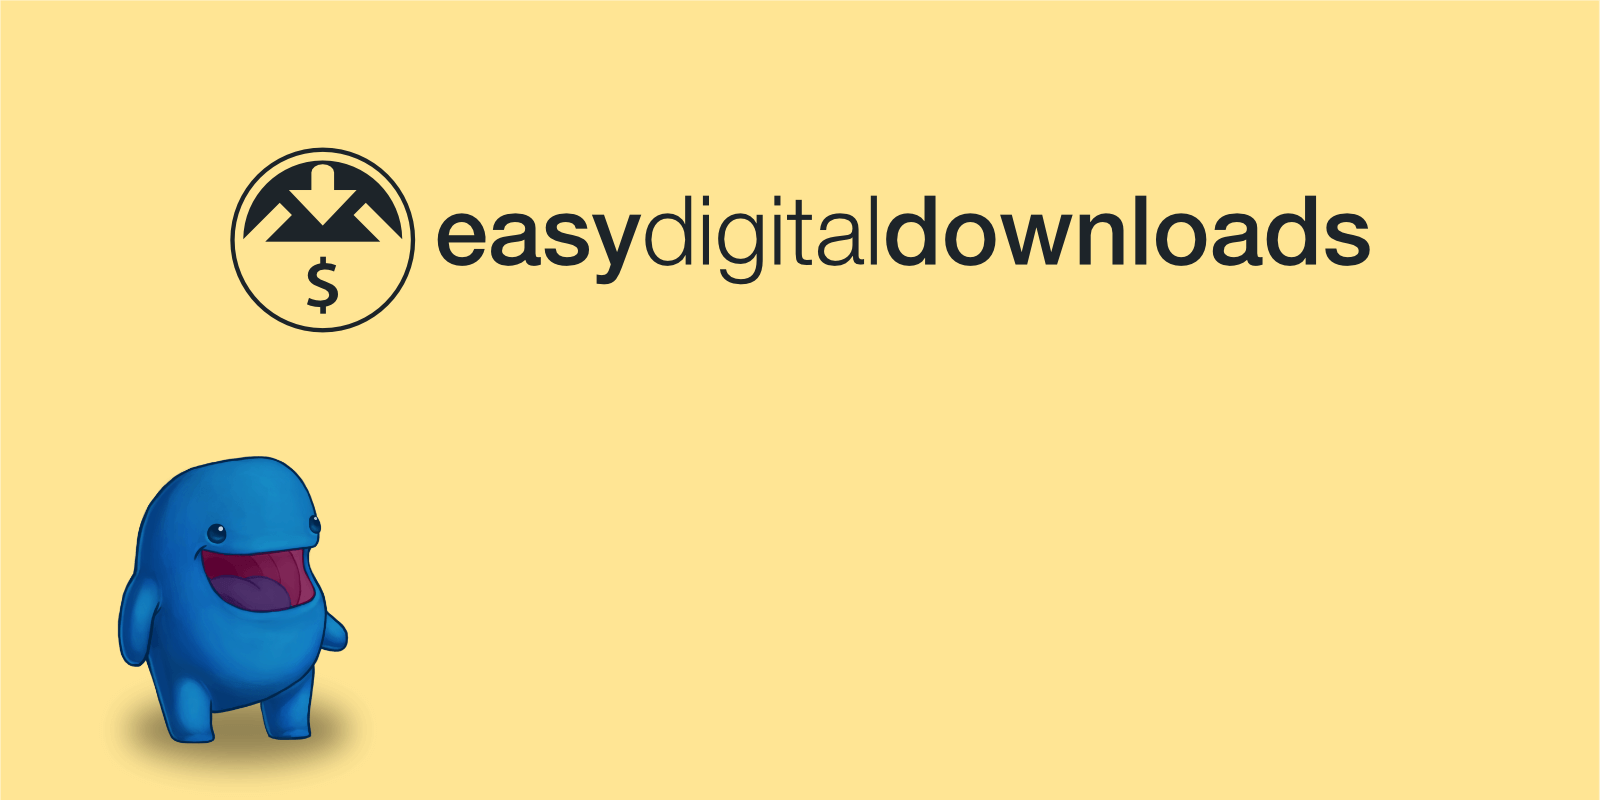 Easy Digital Downloads logo and mascot Edd